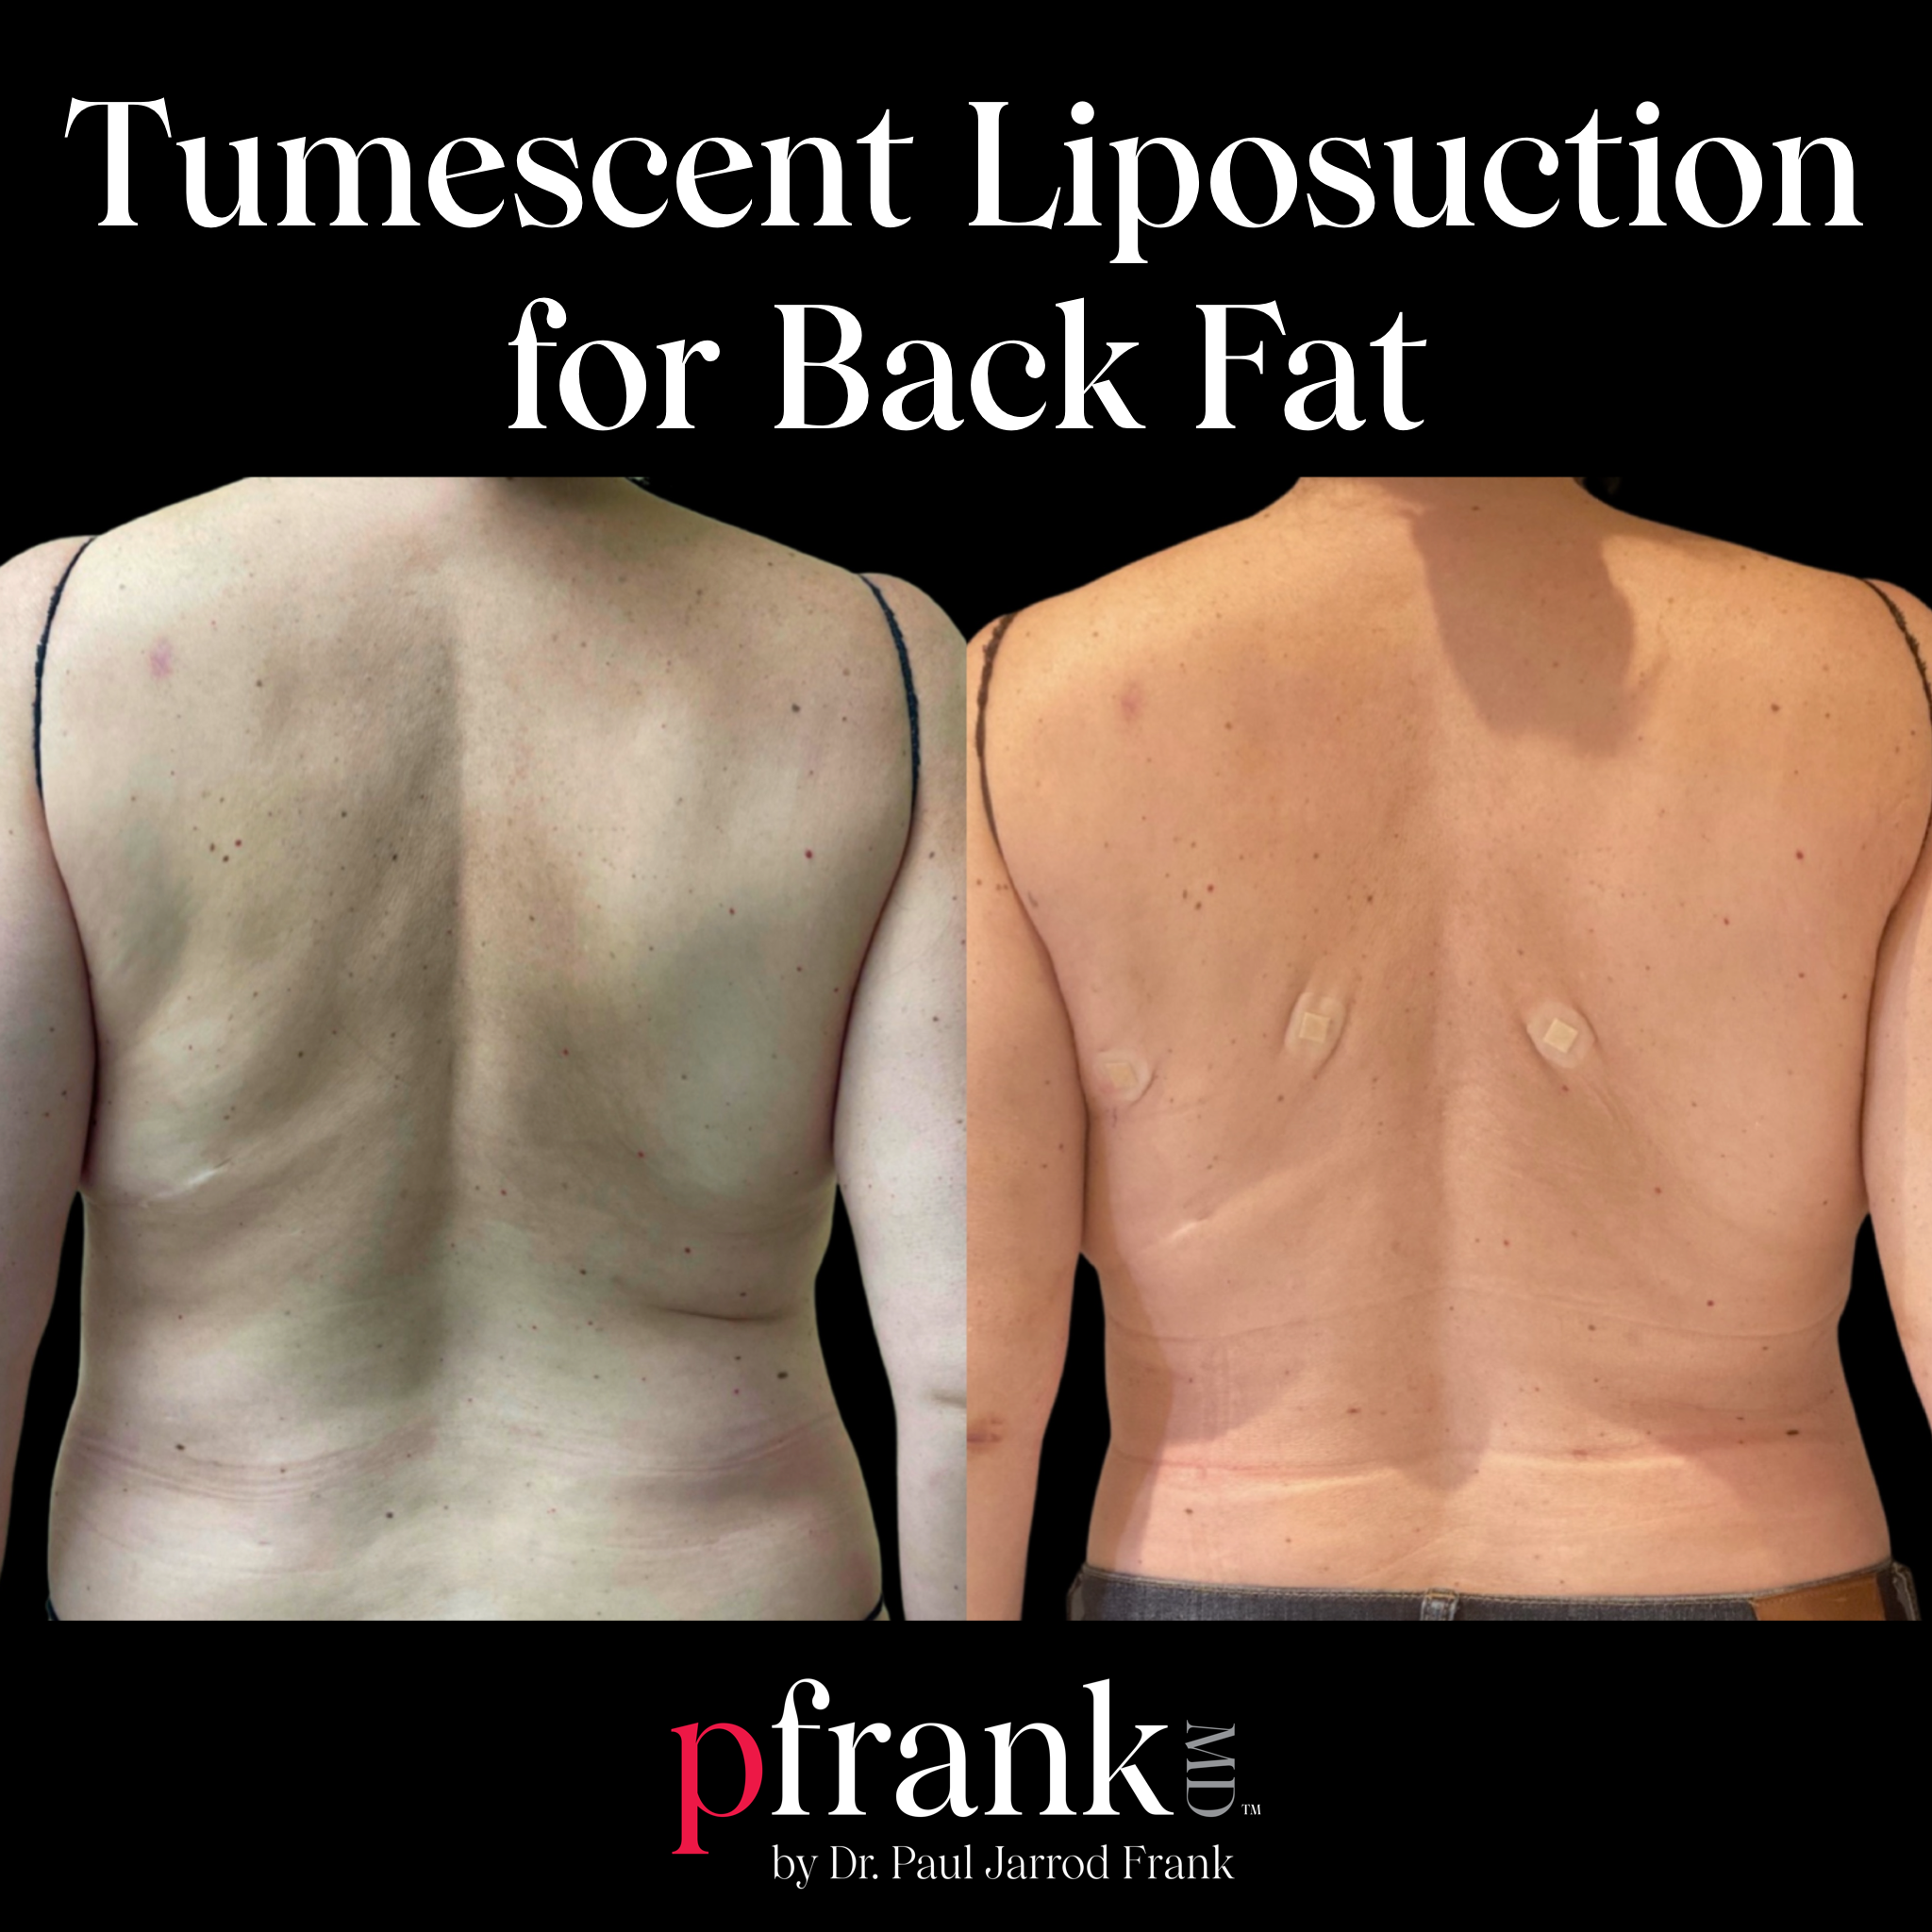 Tumescent liposuction vs. Vaser